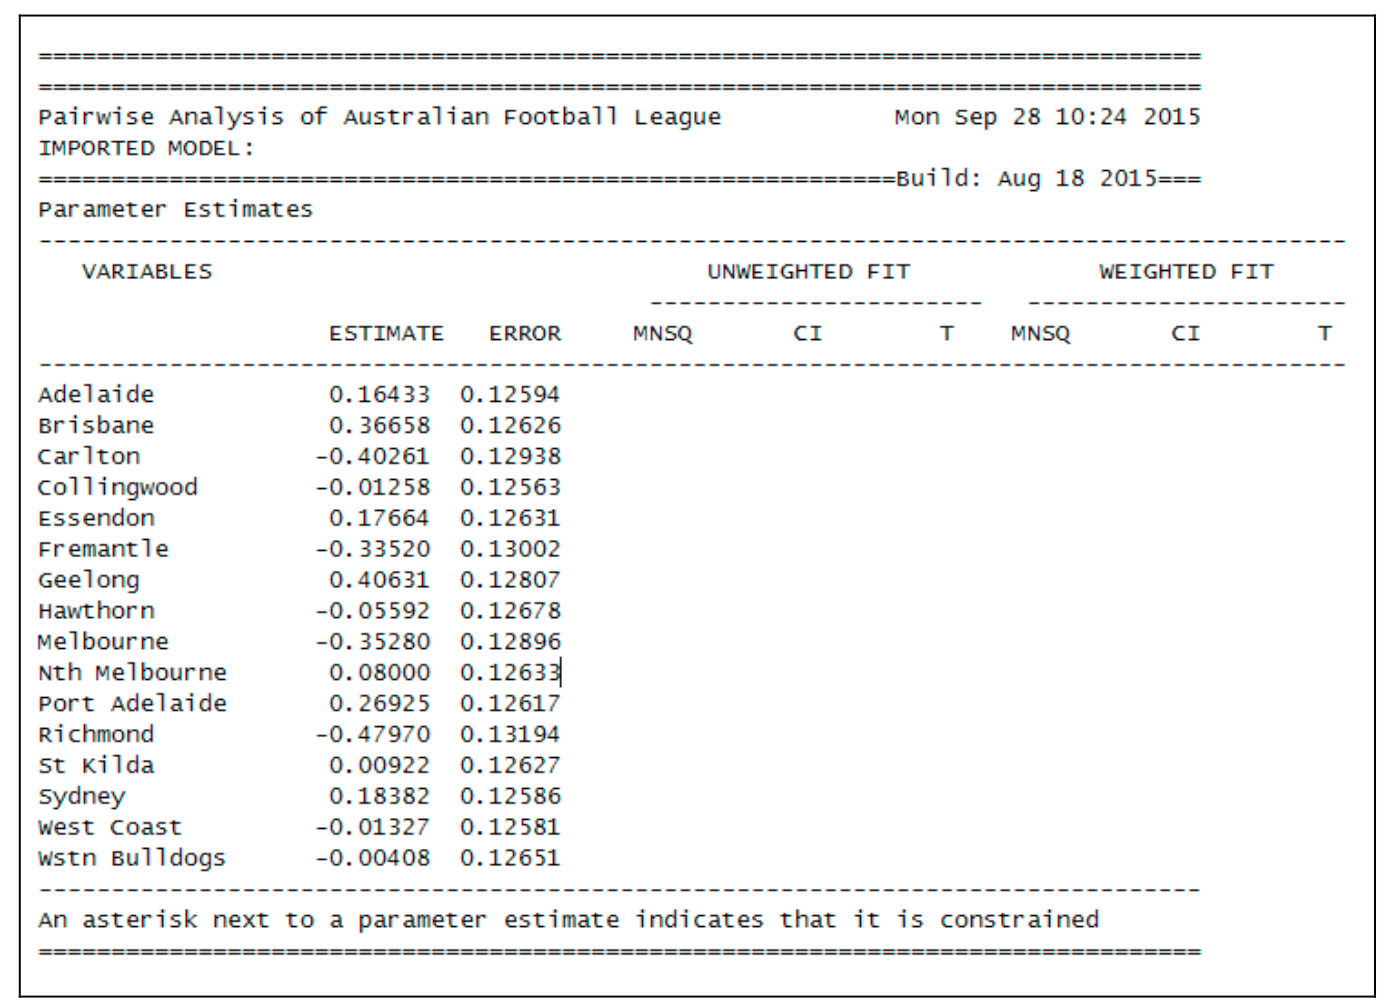 Table of item parameter esitmates